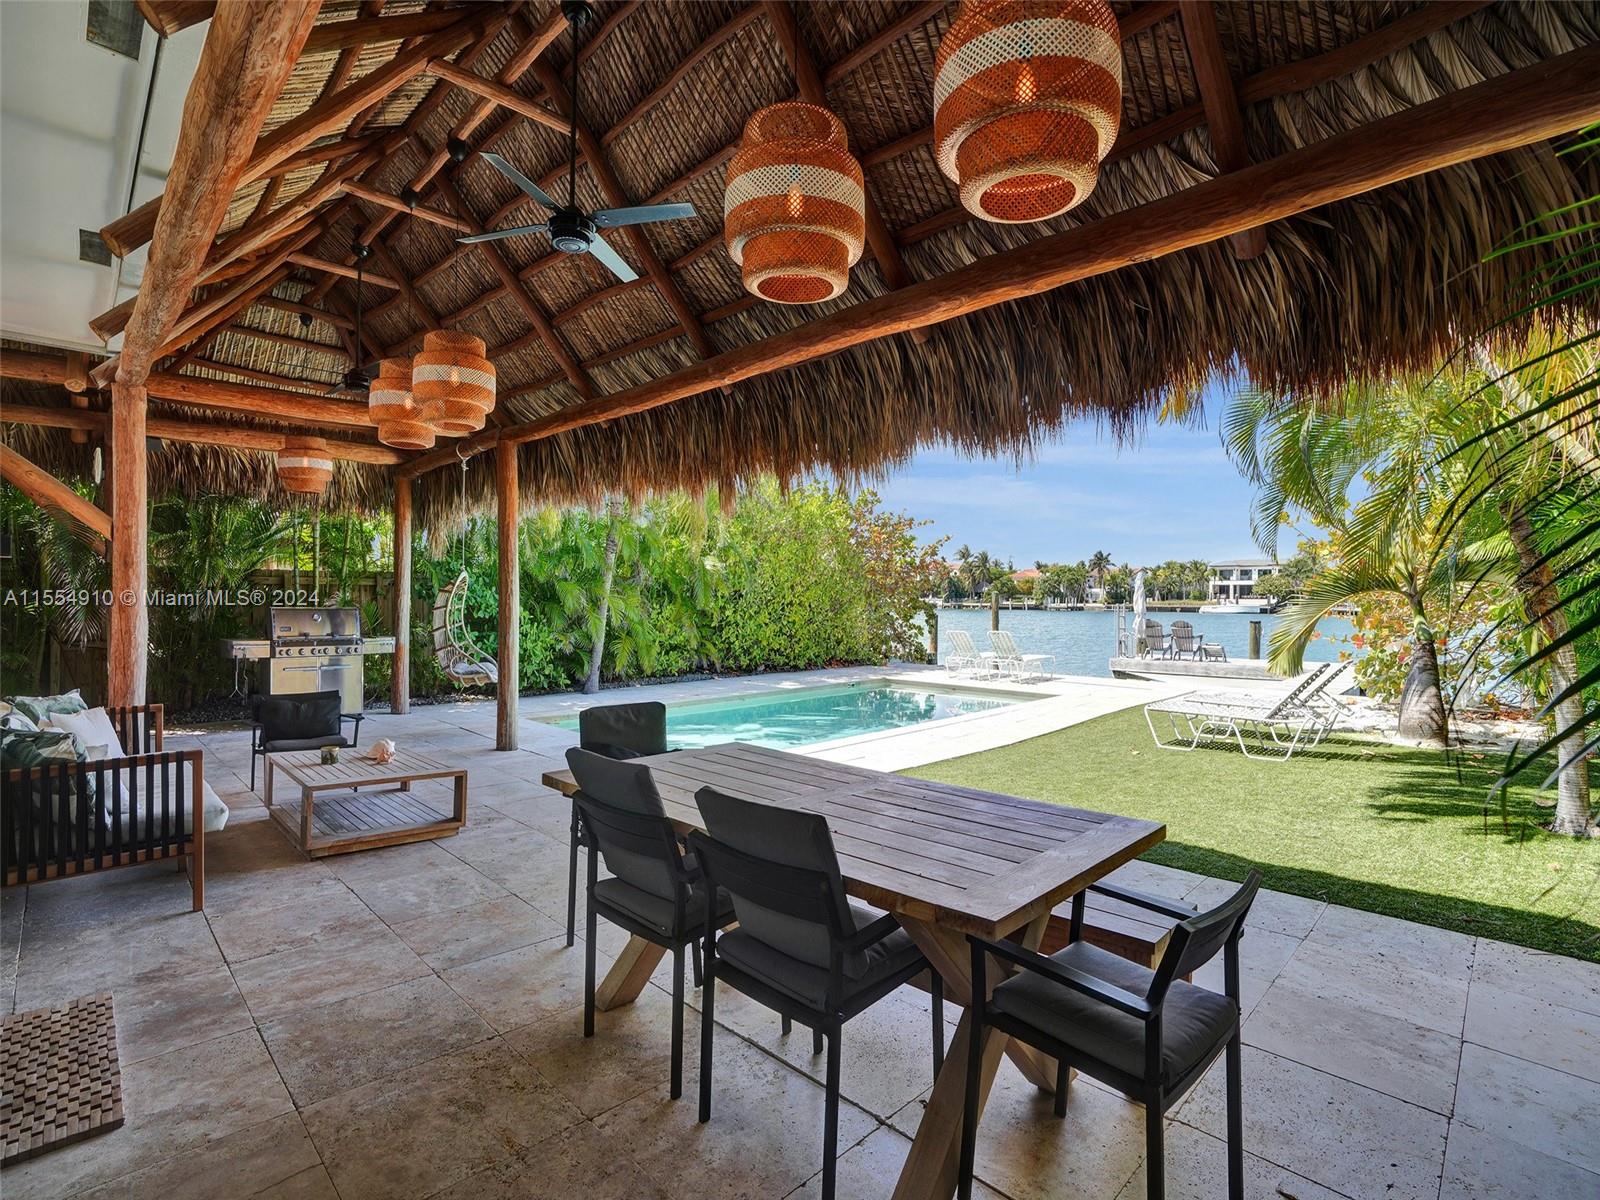 Rental Property at 811 86th St, Miami Beach, Miami-Dade County, Florida - Bedrooms: 3 
Bathrooms: 4  - $25,000 MO.